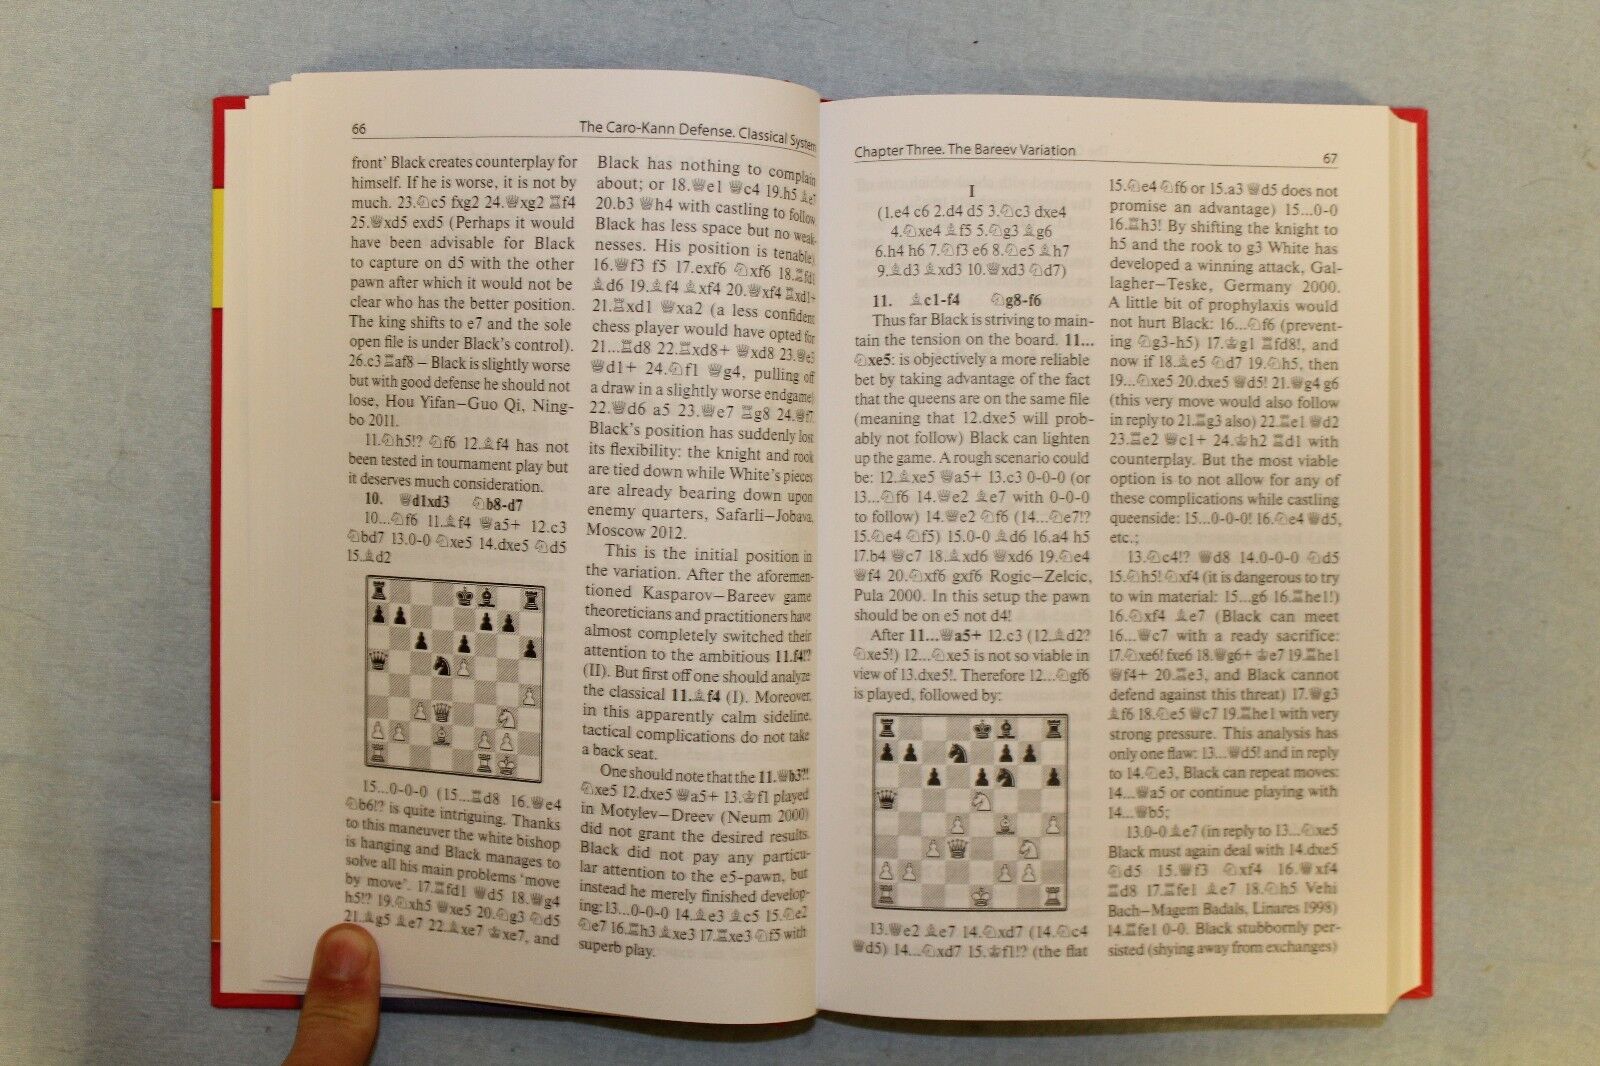 Chess Tactics in Caro-Kann Defense (DVD) – Chess River